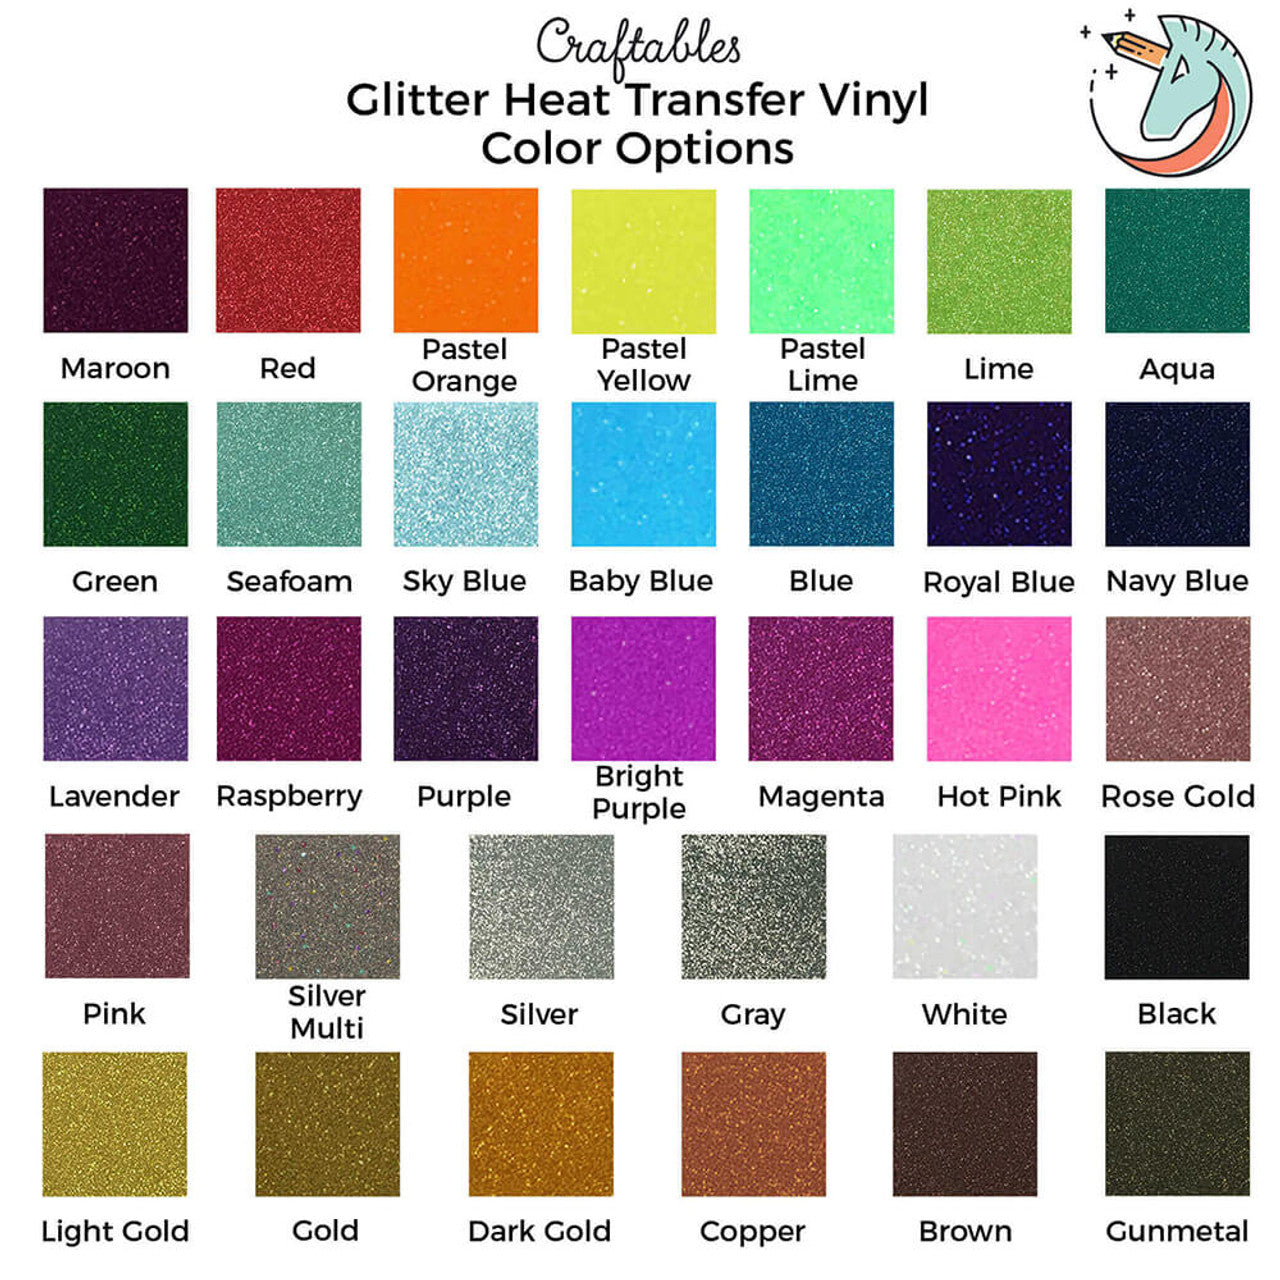 Silver Multi Glitter Heat Transfer Vinyl Sheets By Craftables